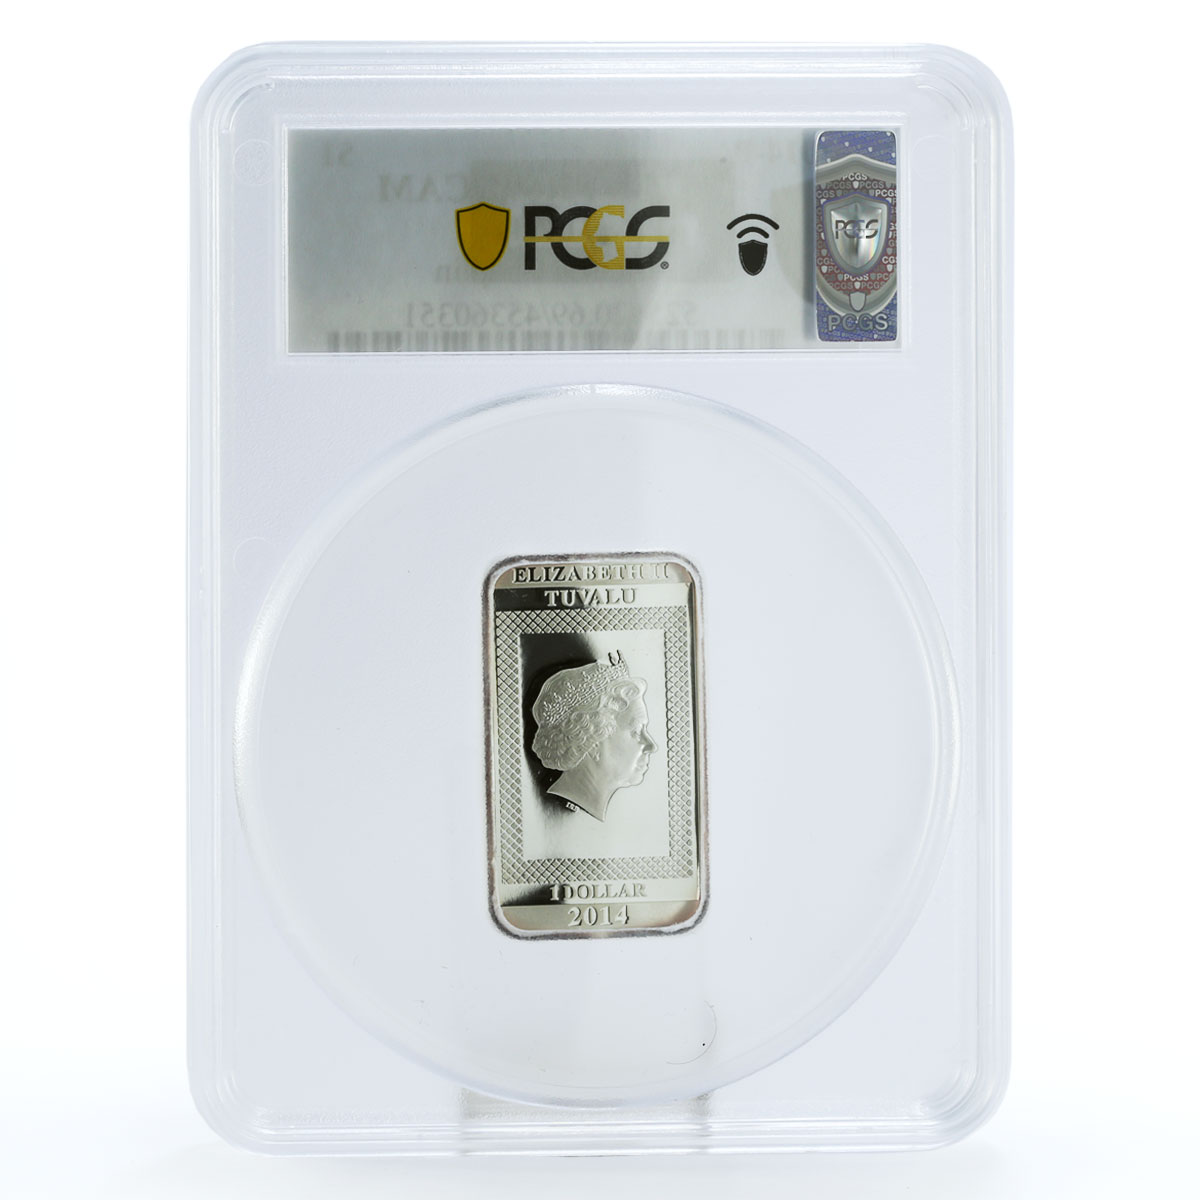 Tuvalu 1 dollar 100th Birth Charlie Chaplin PR69 PCGS hologram silver coin 2014